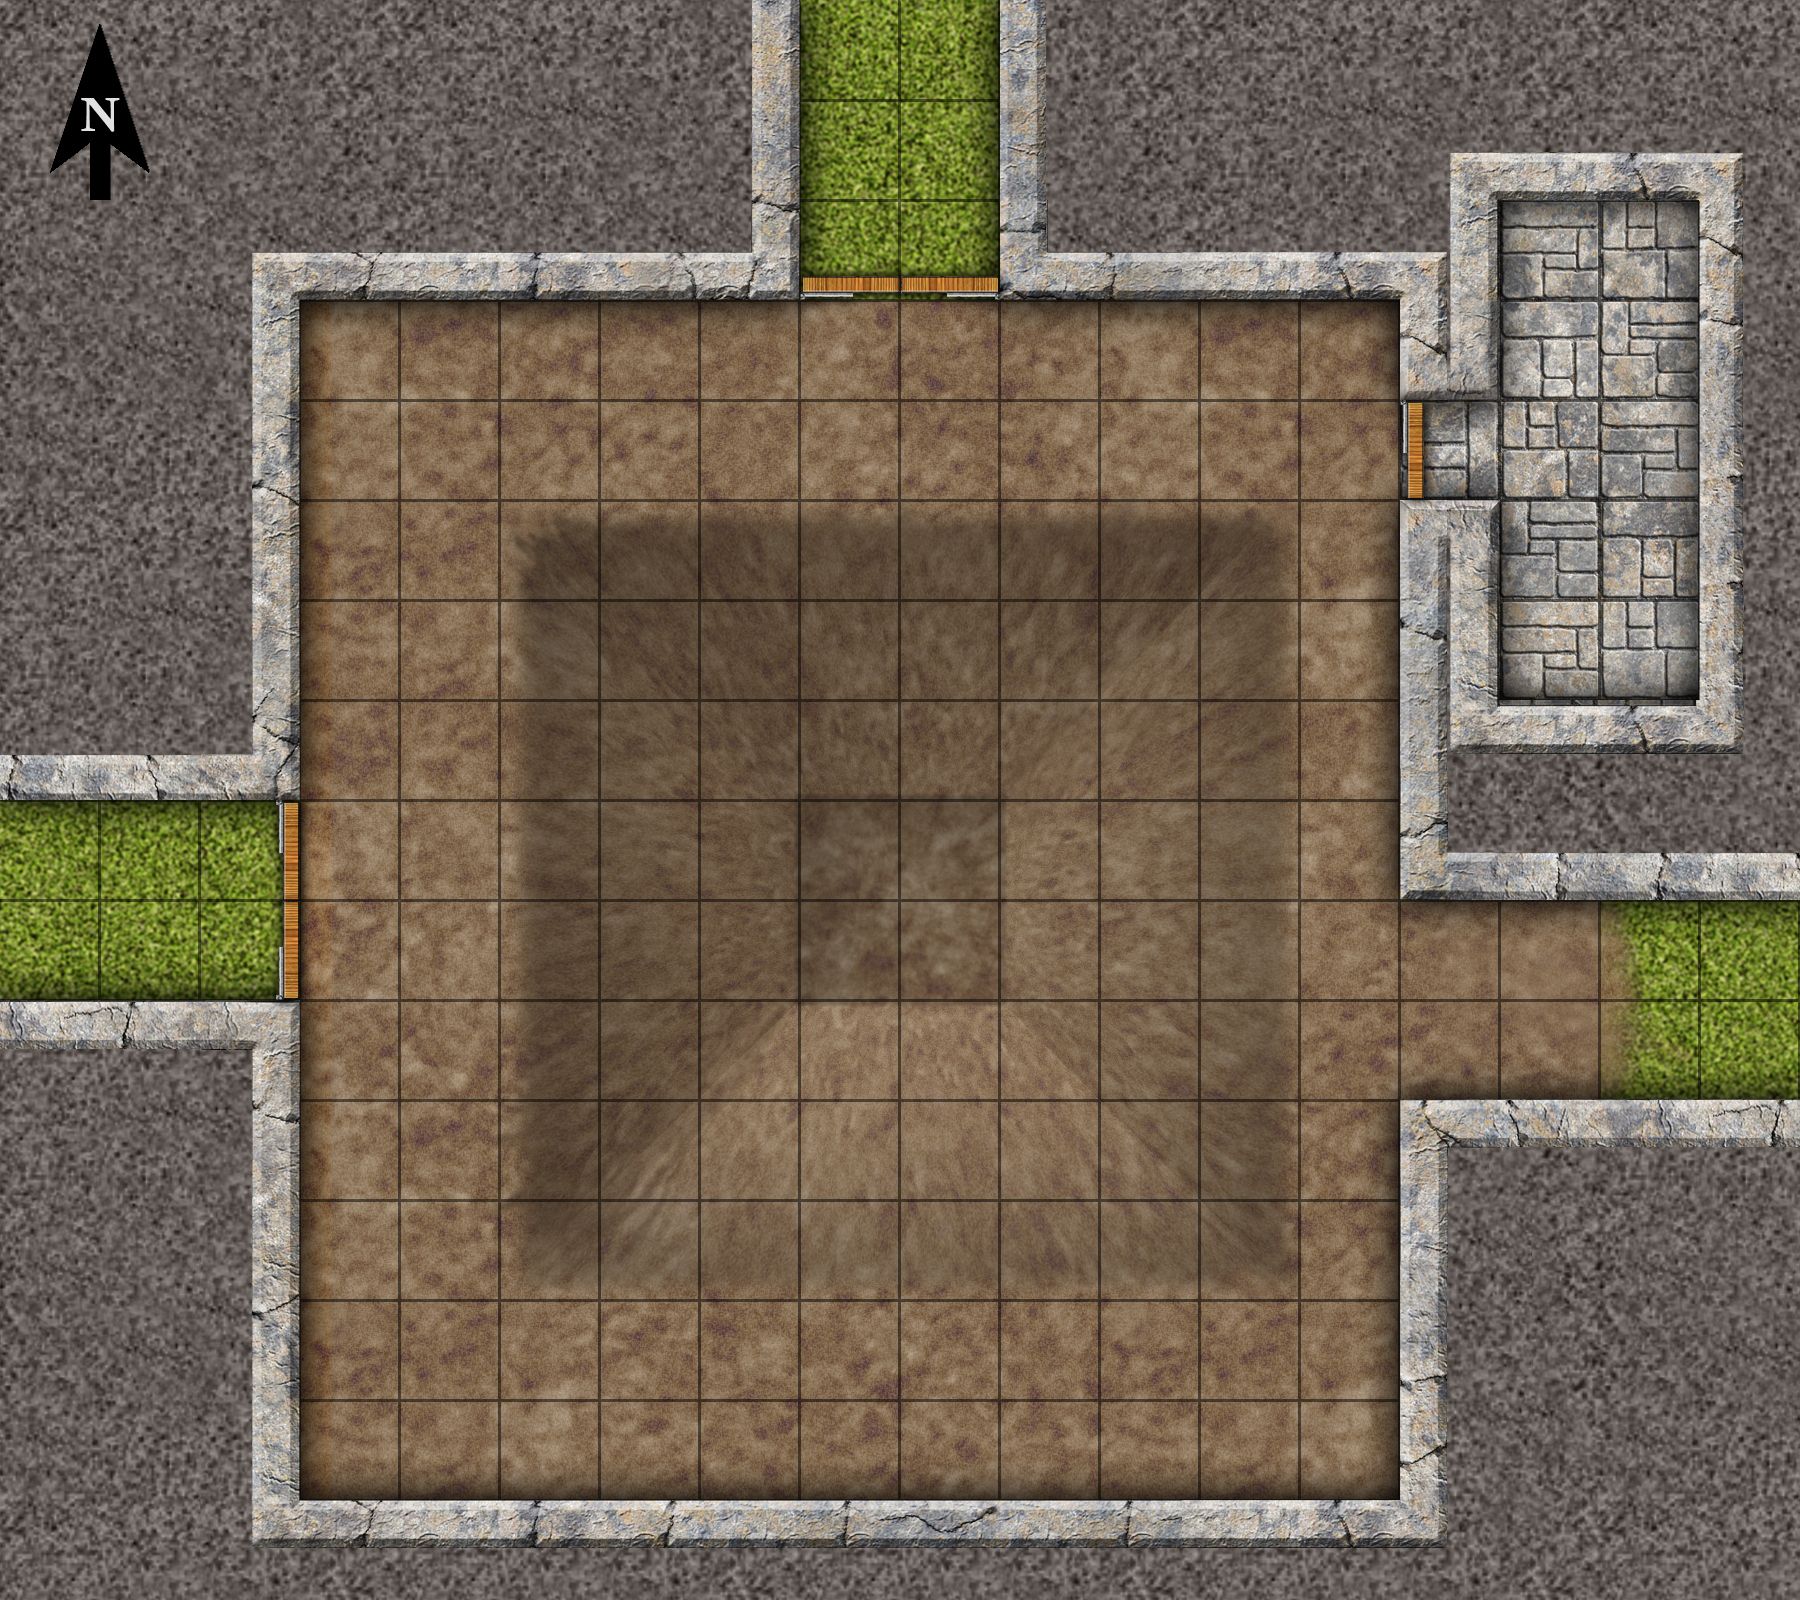 H3 Pyramid of Shadows: Area 7